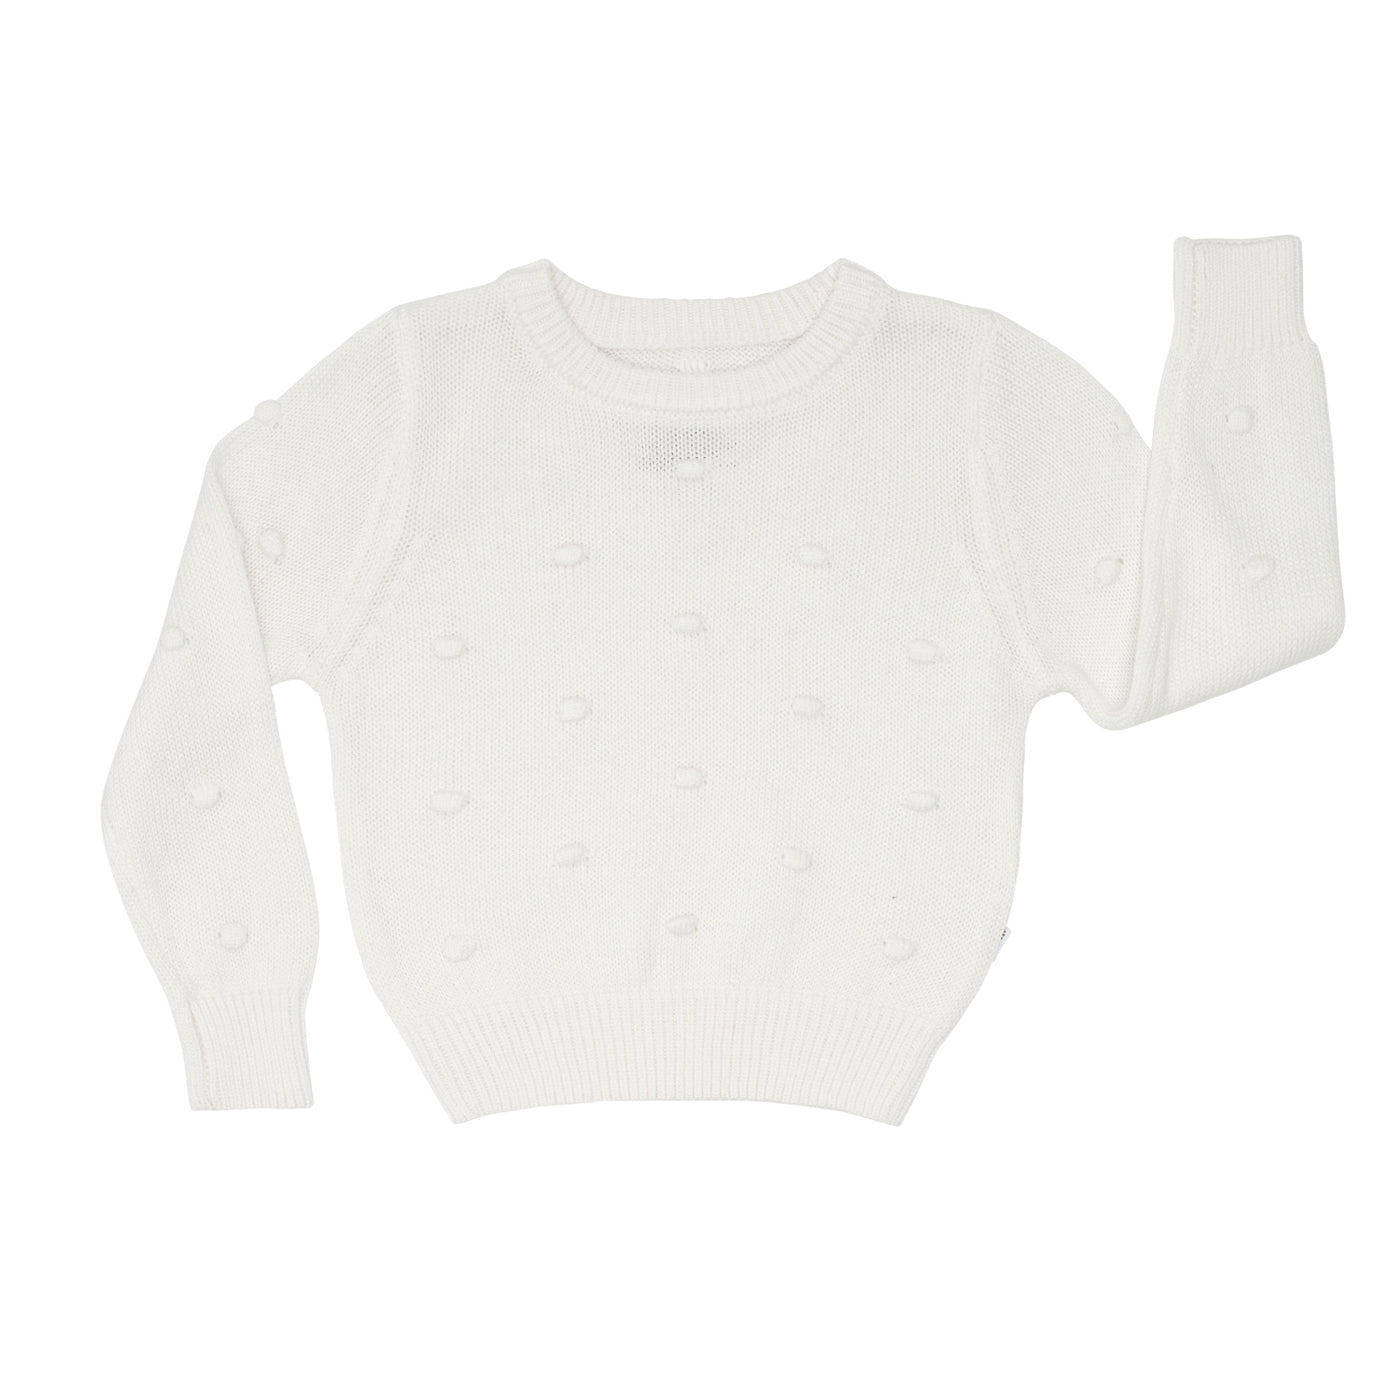 Flat lay image of an Ivory pom pom sweater